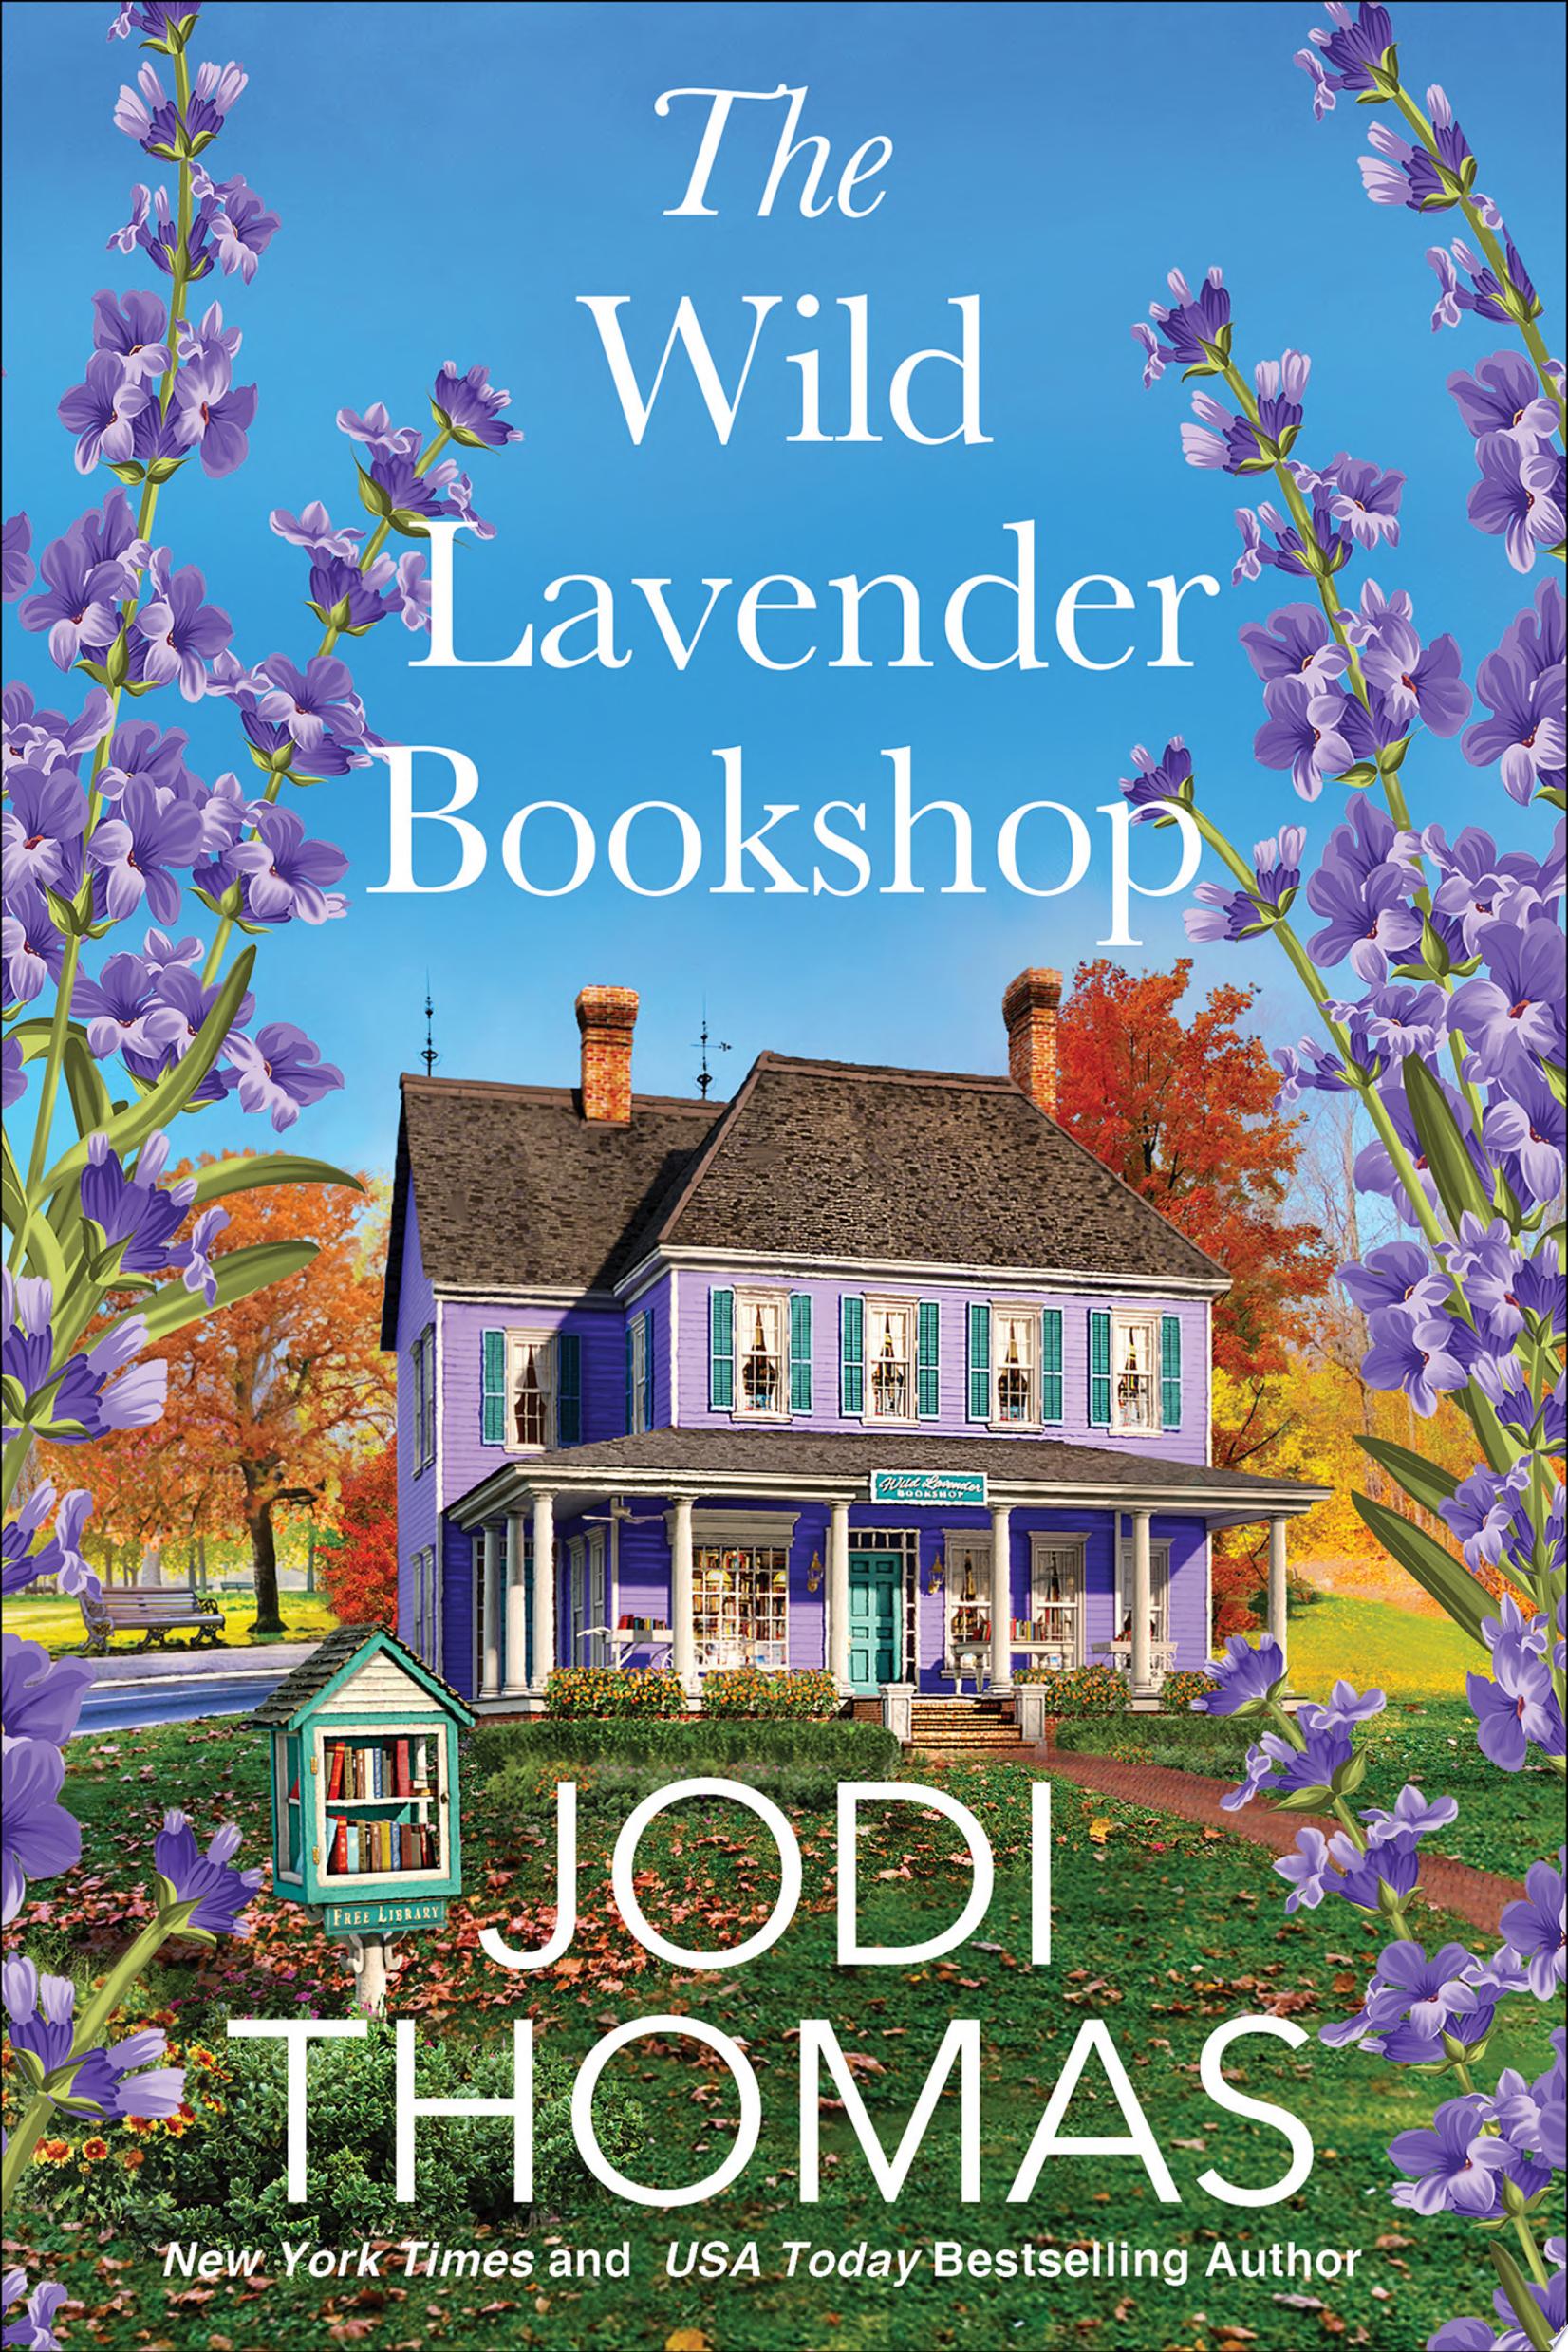 Image for "The Wild Lavender Bookshop"